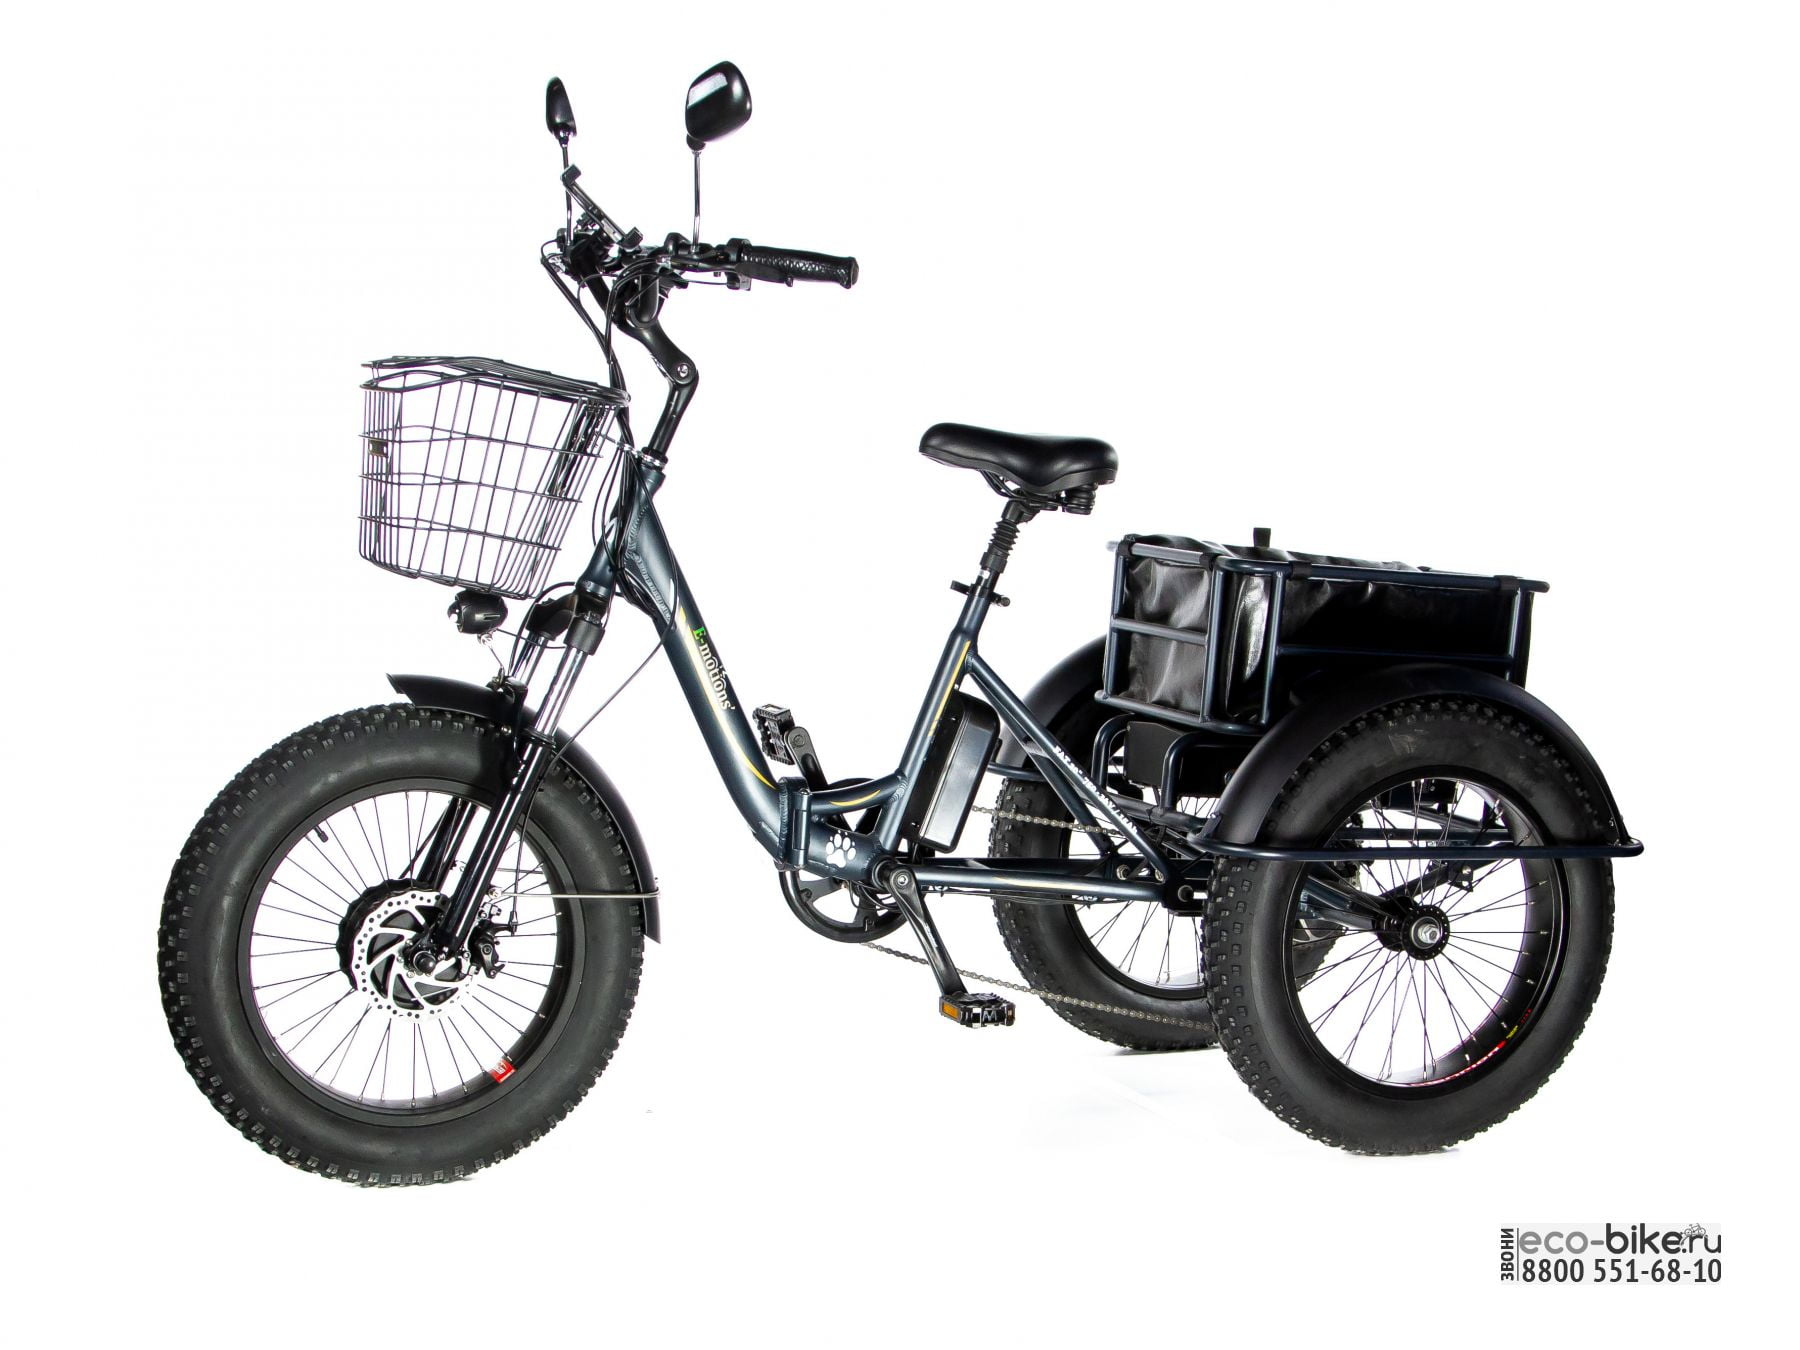 Купить электровелосипед в беларуси недорого с доставкой. Электровелосипед трицикл e-Motions Panda 750w. Трехколесный электровелосипед e-Motions Kangoo-ru 500w. Трехколесный электровелосипед Делта. Электровелосипед трехколесный ok-350e 20"6 скор..